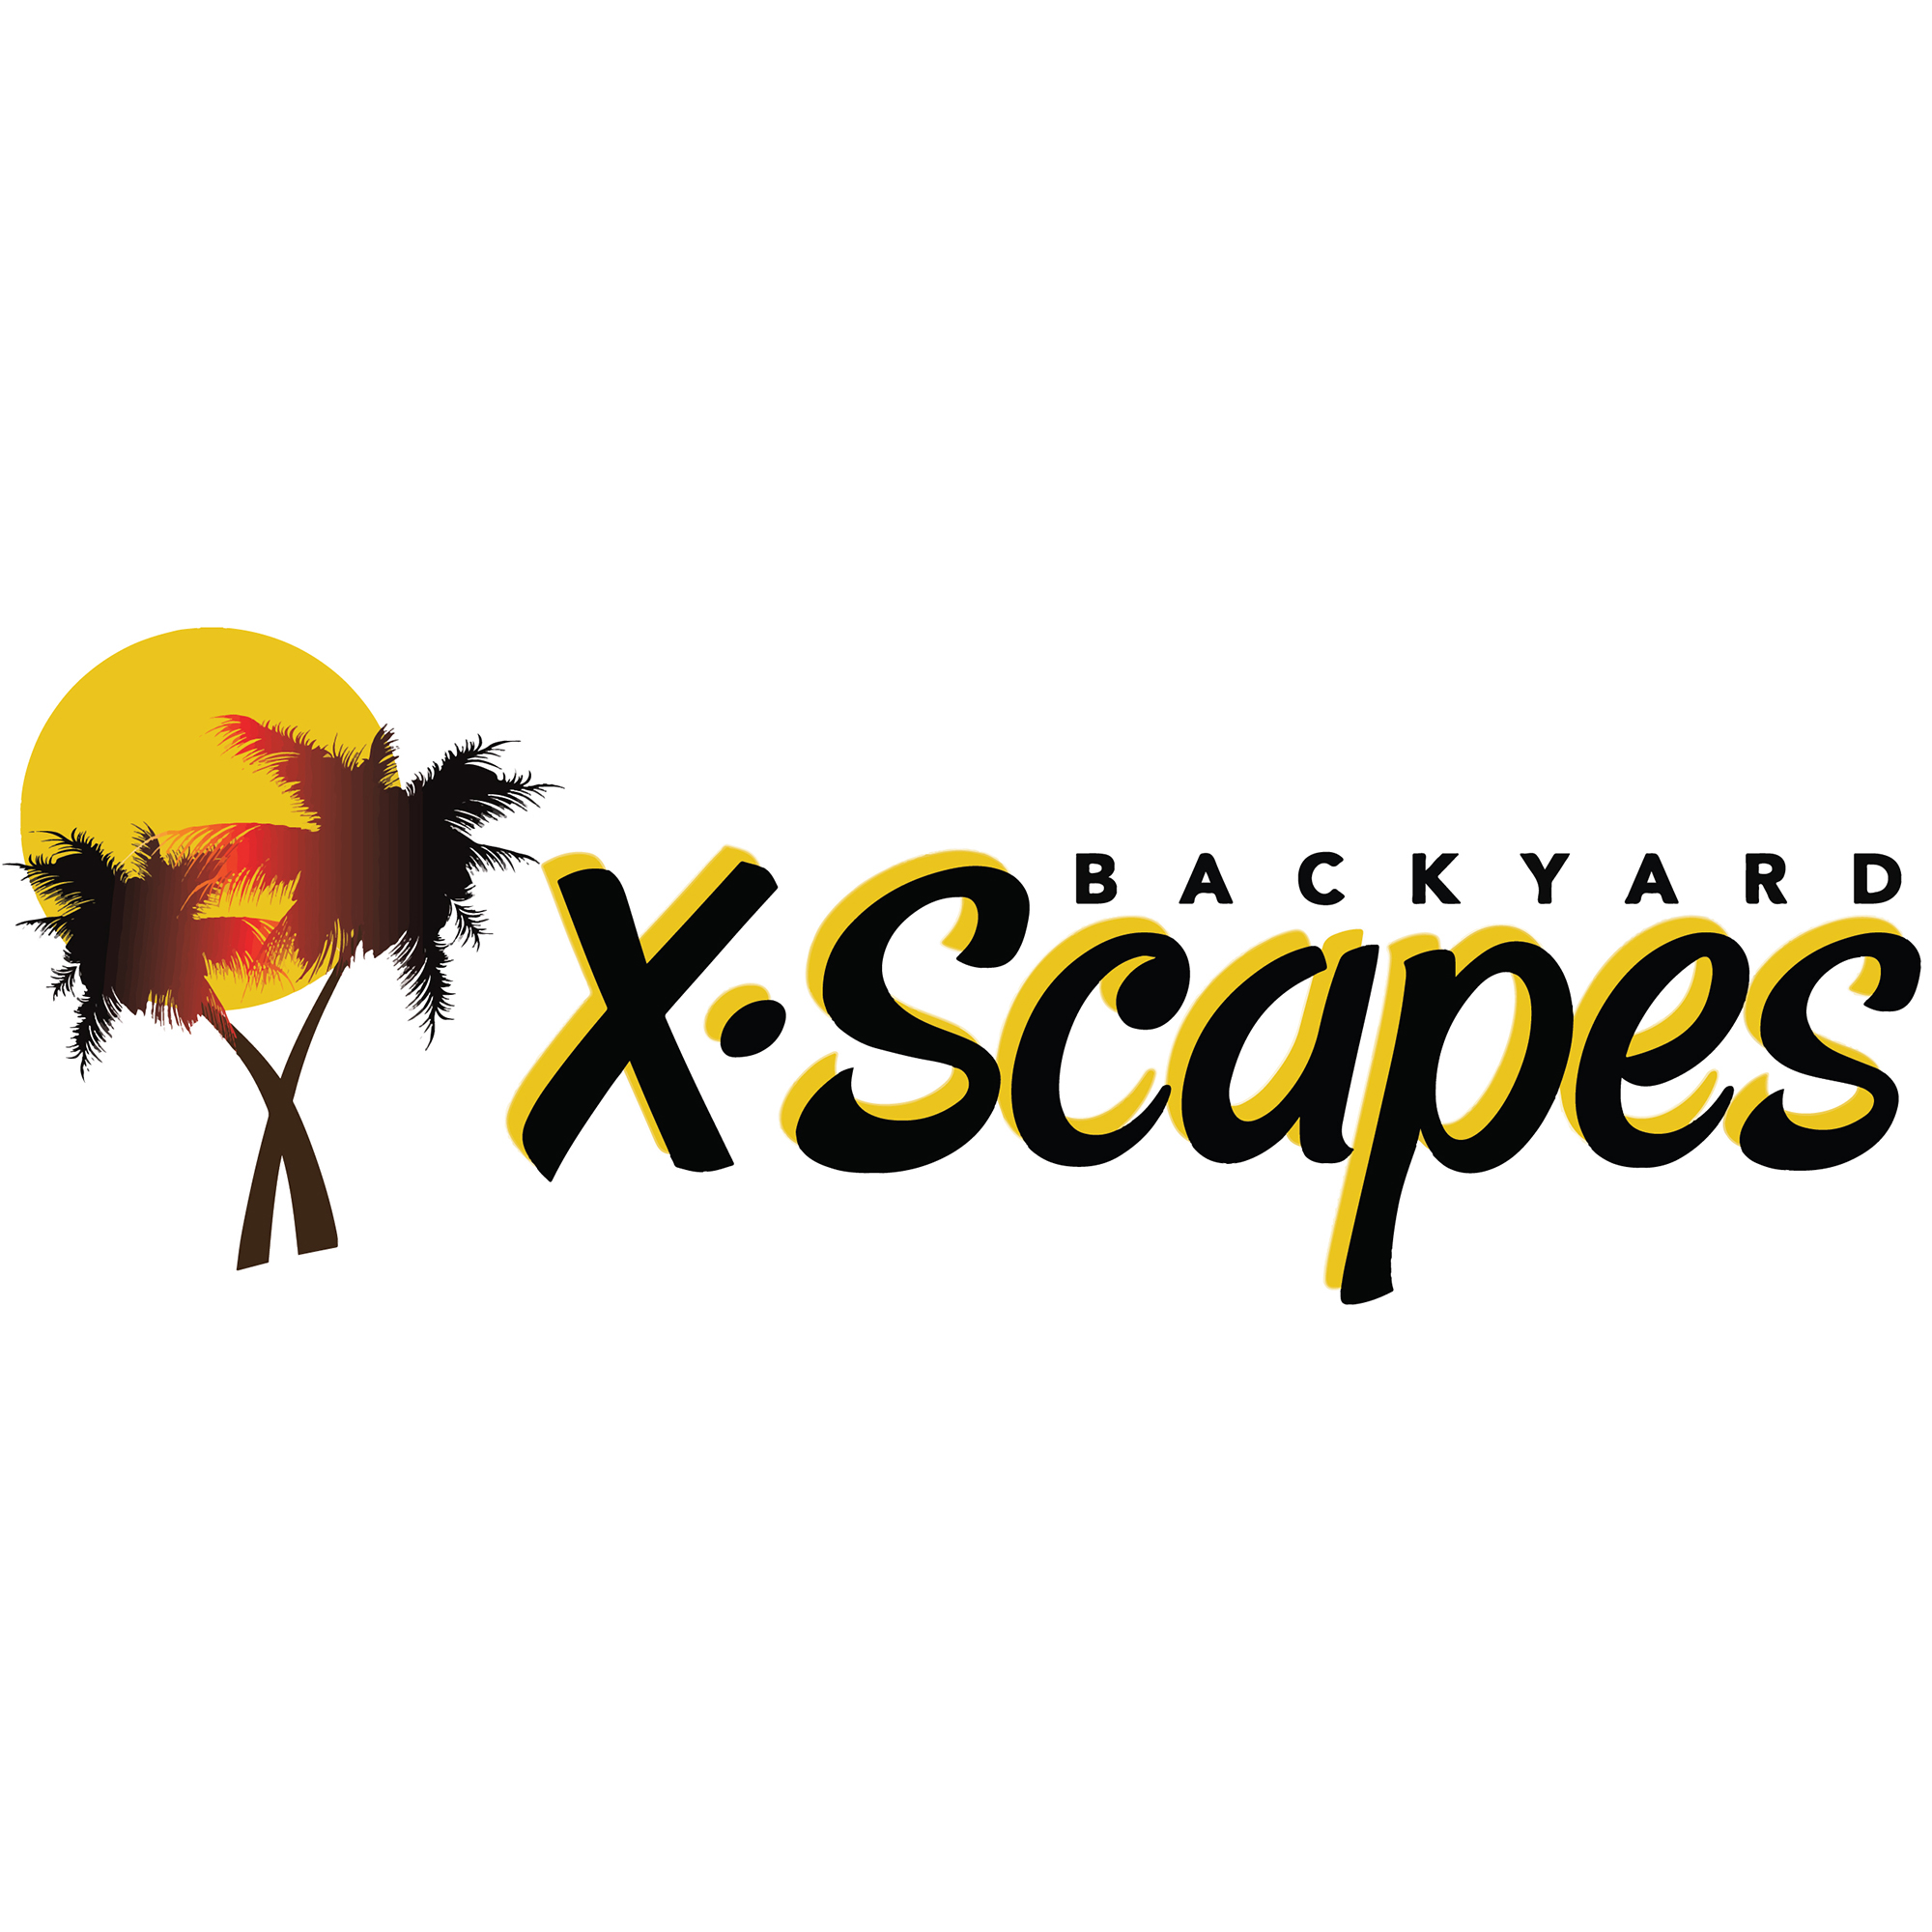 XSCAPES_HI-Square.jpg